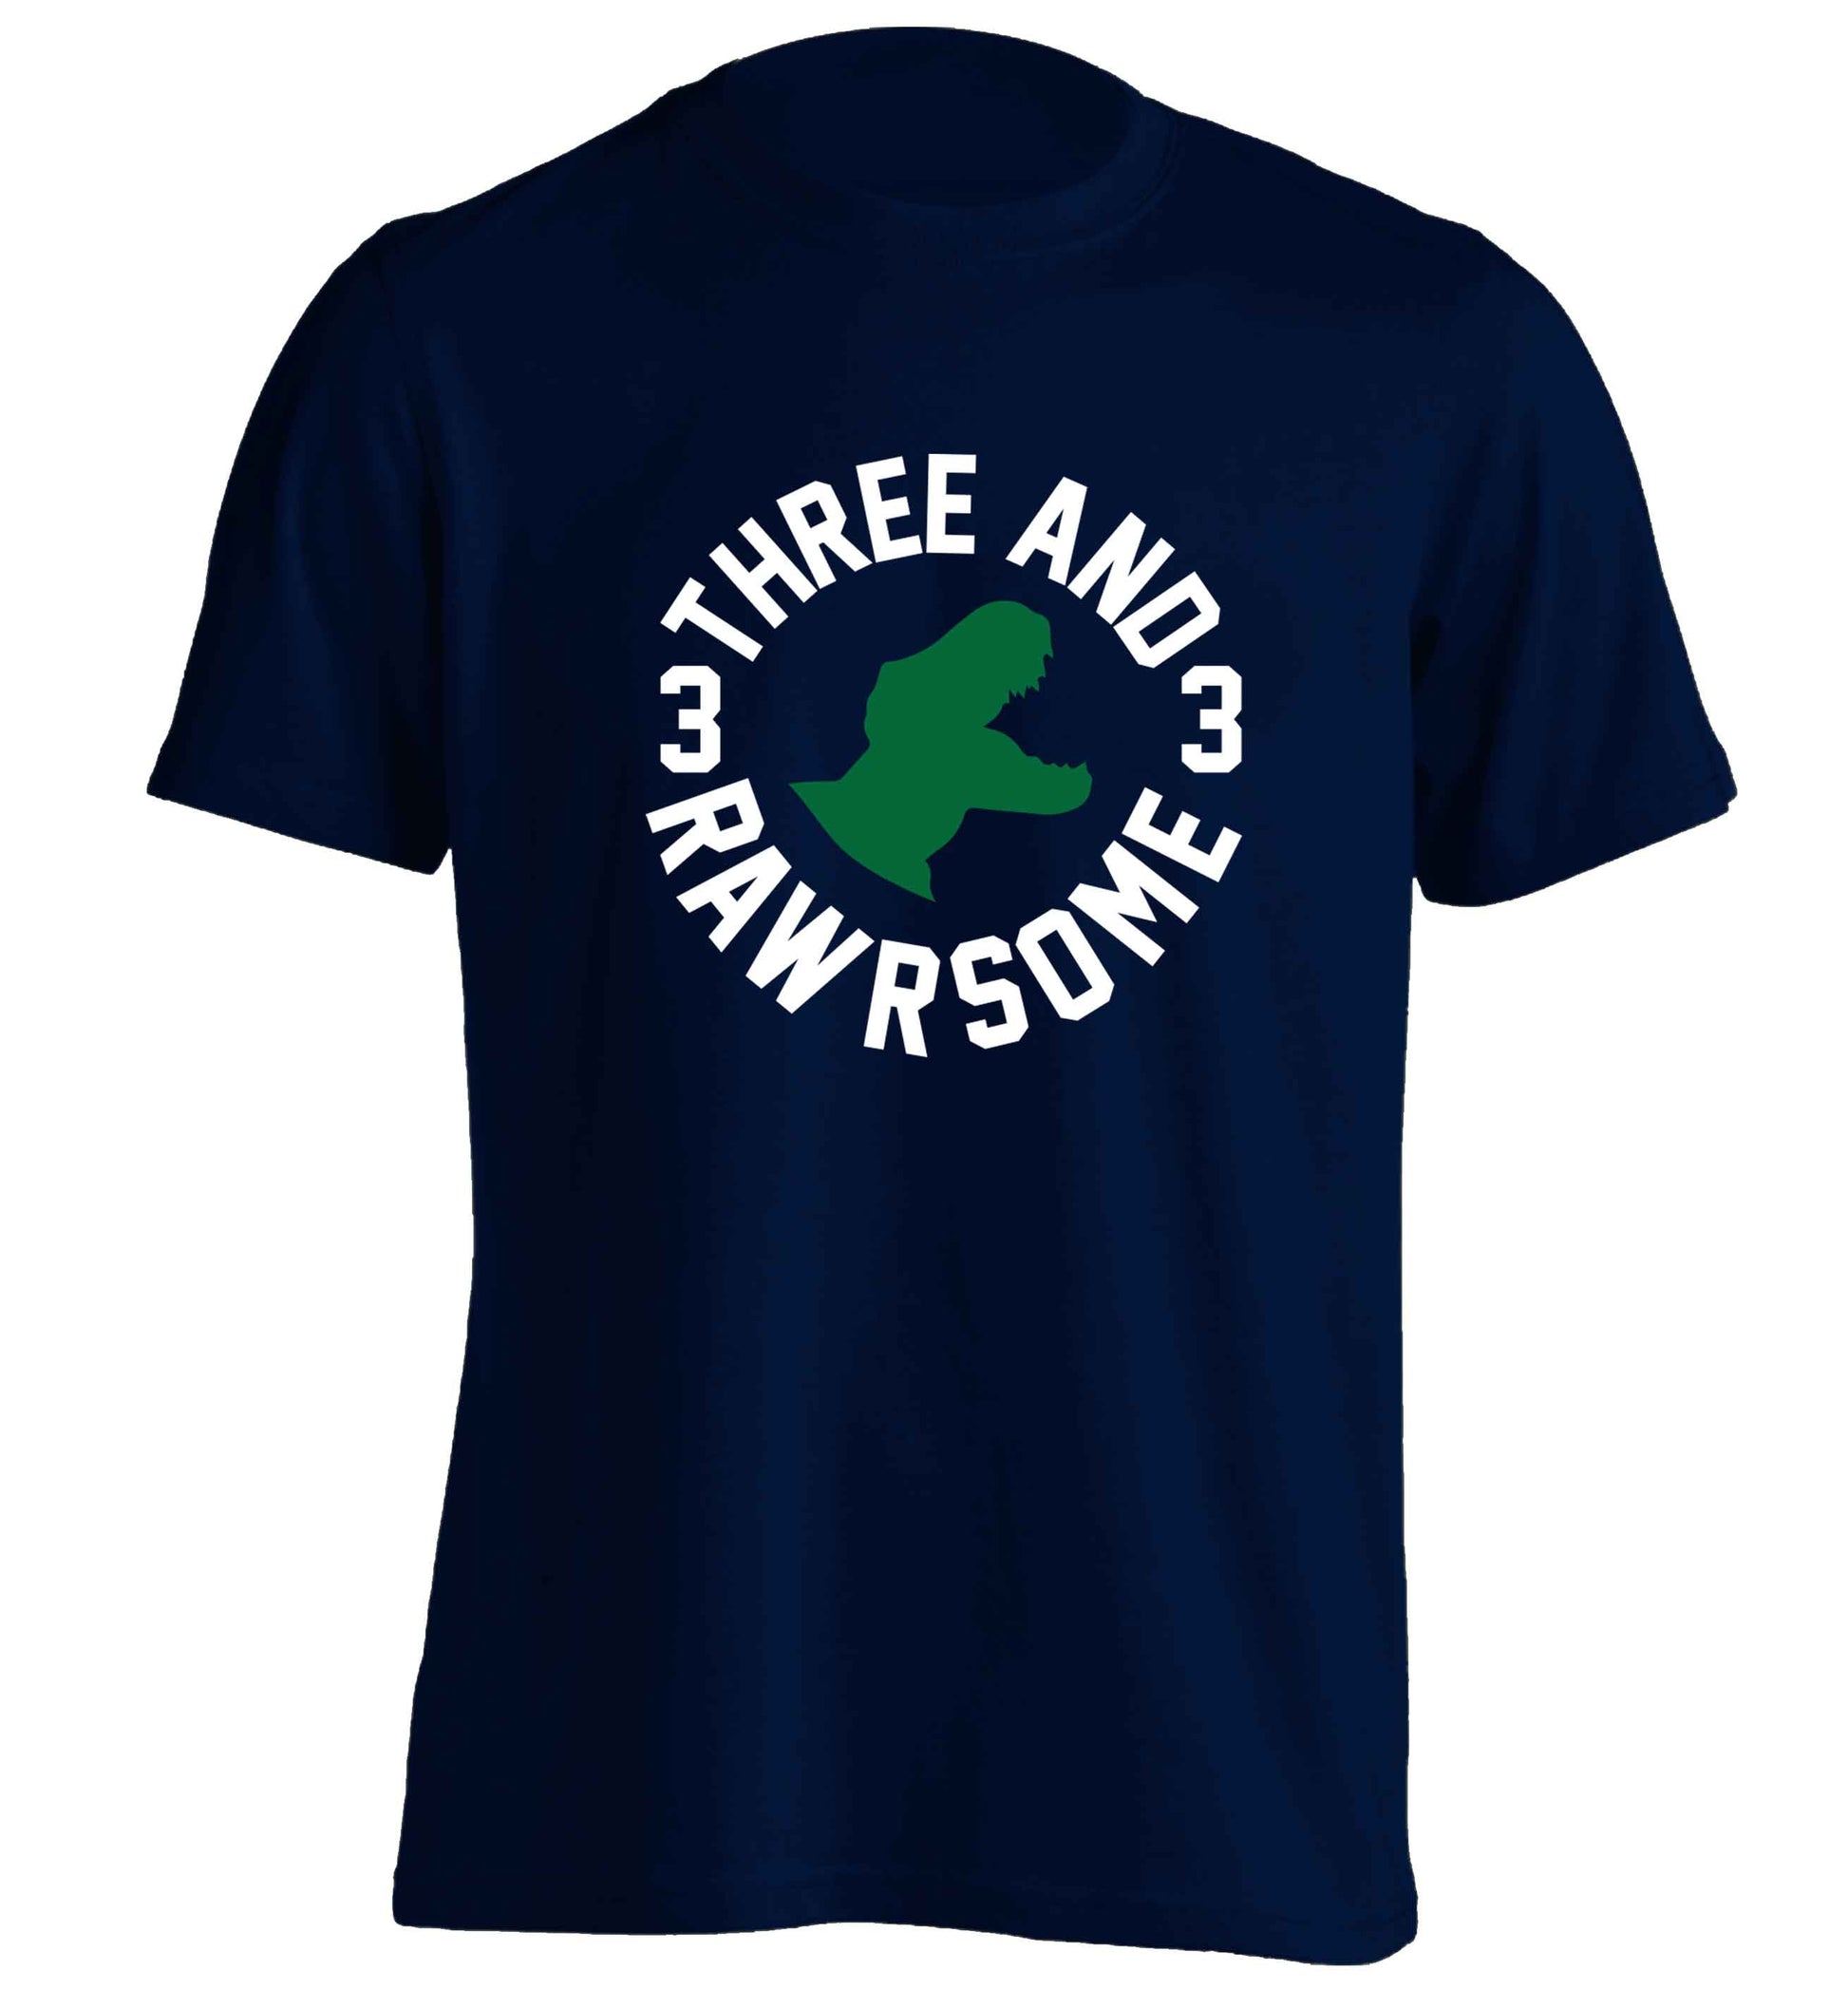 Three and rawrsome adults unisex navy Tshirt 2XL